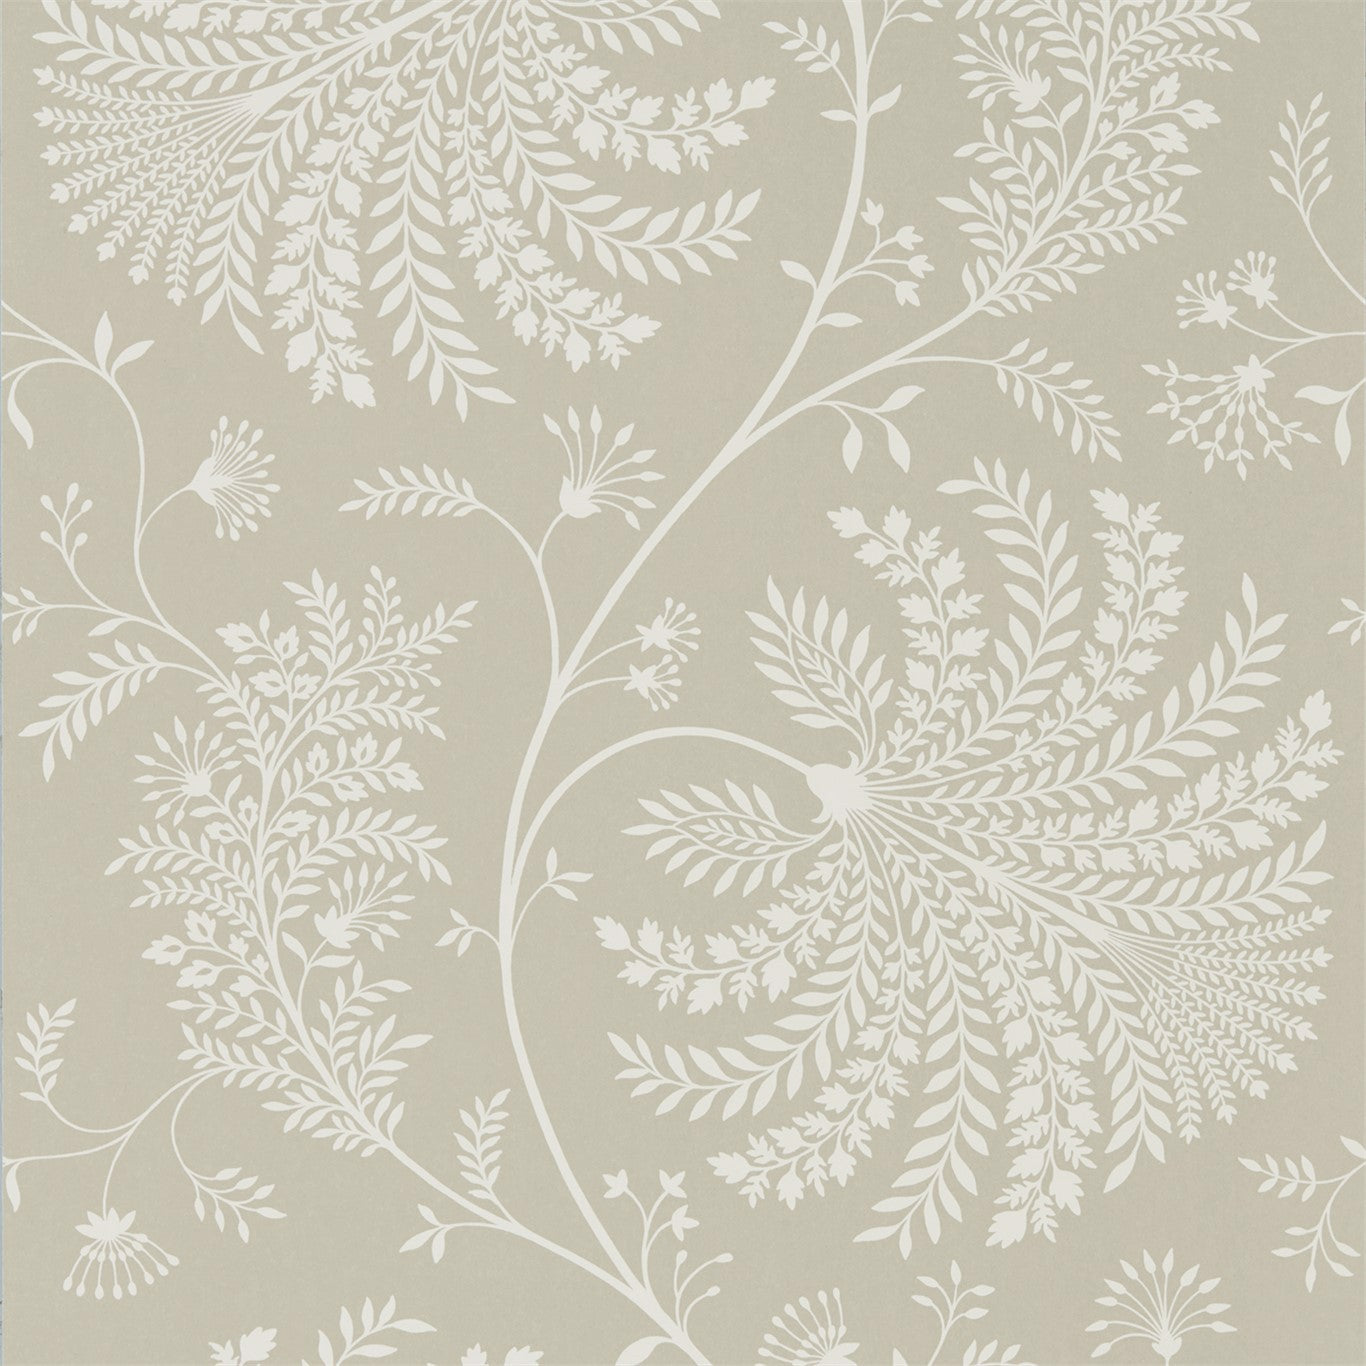 Mapperton Linen/Cream Wallpaper DART216342 by Sanderson